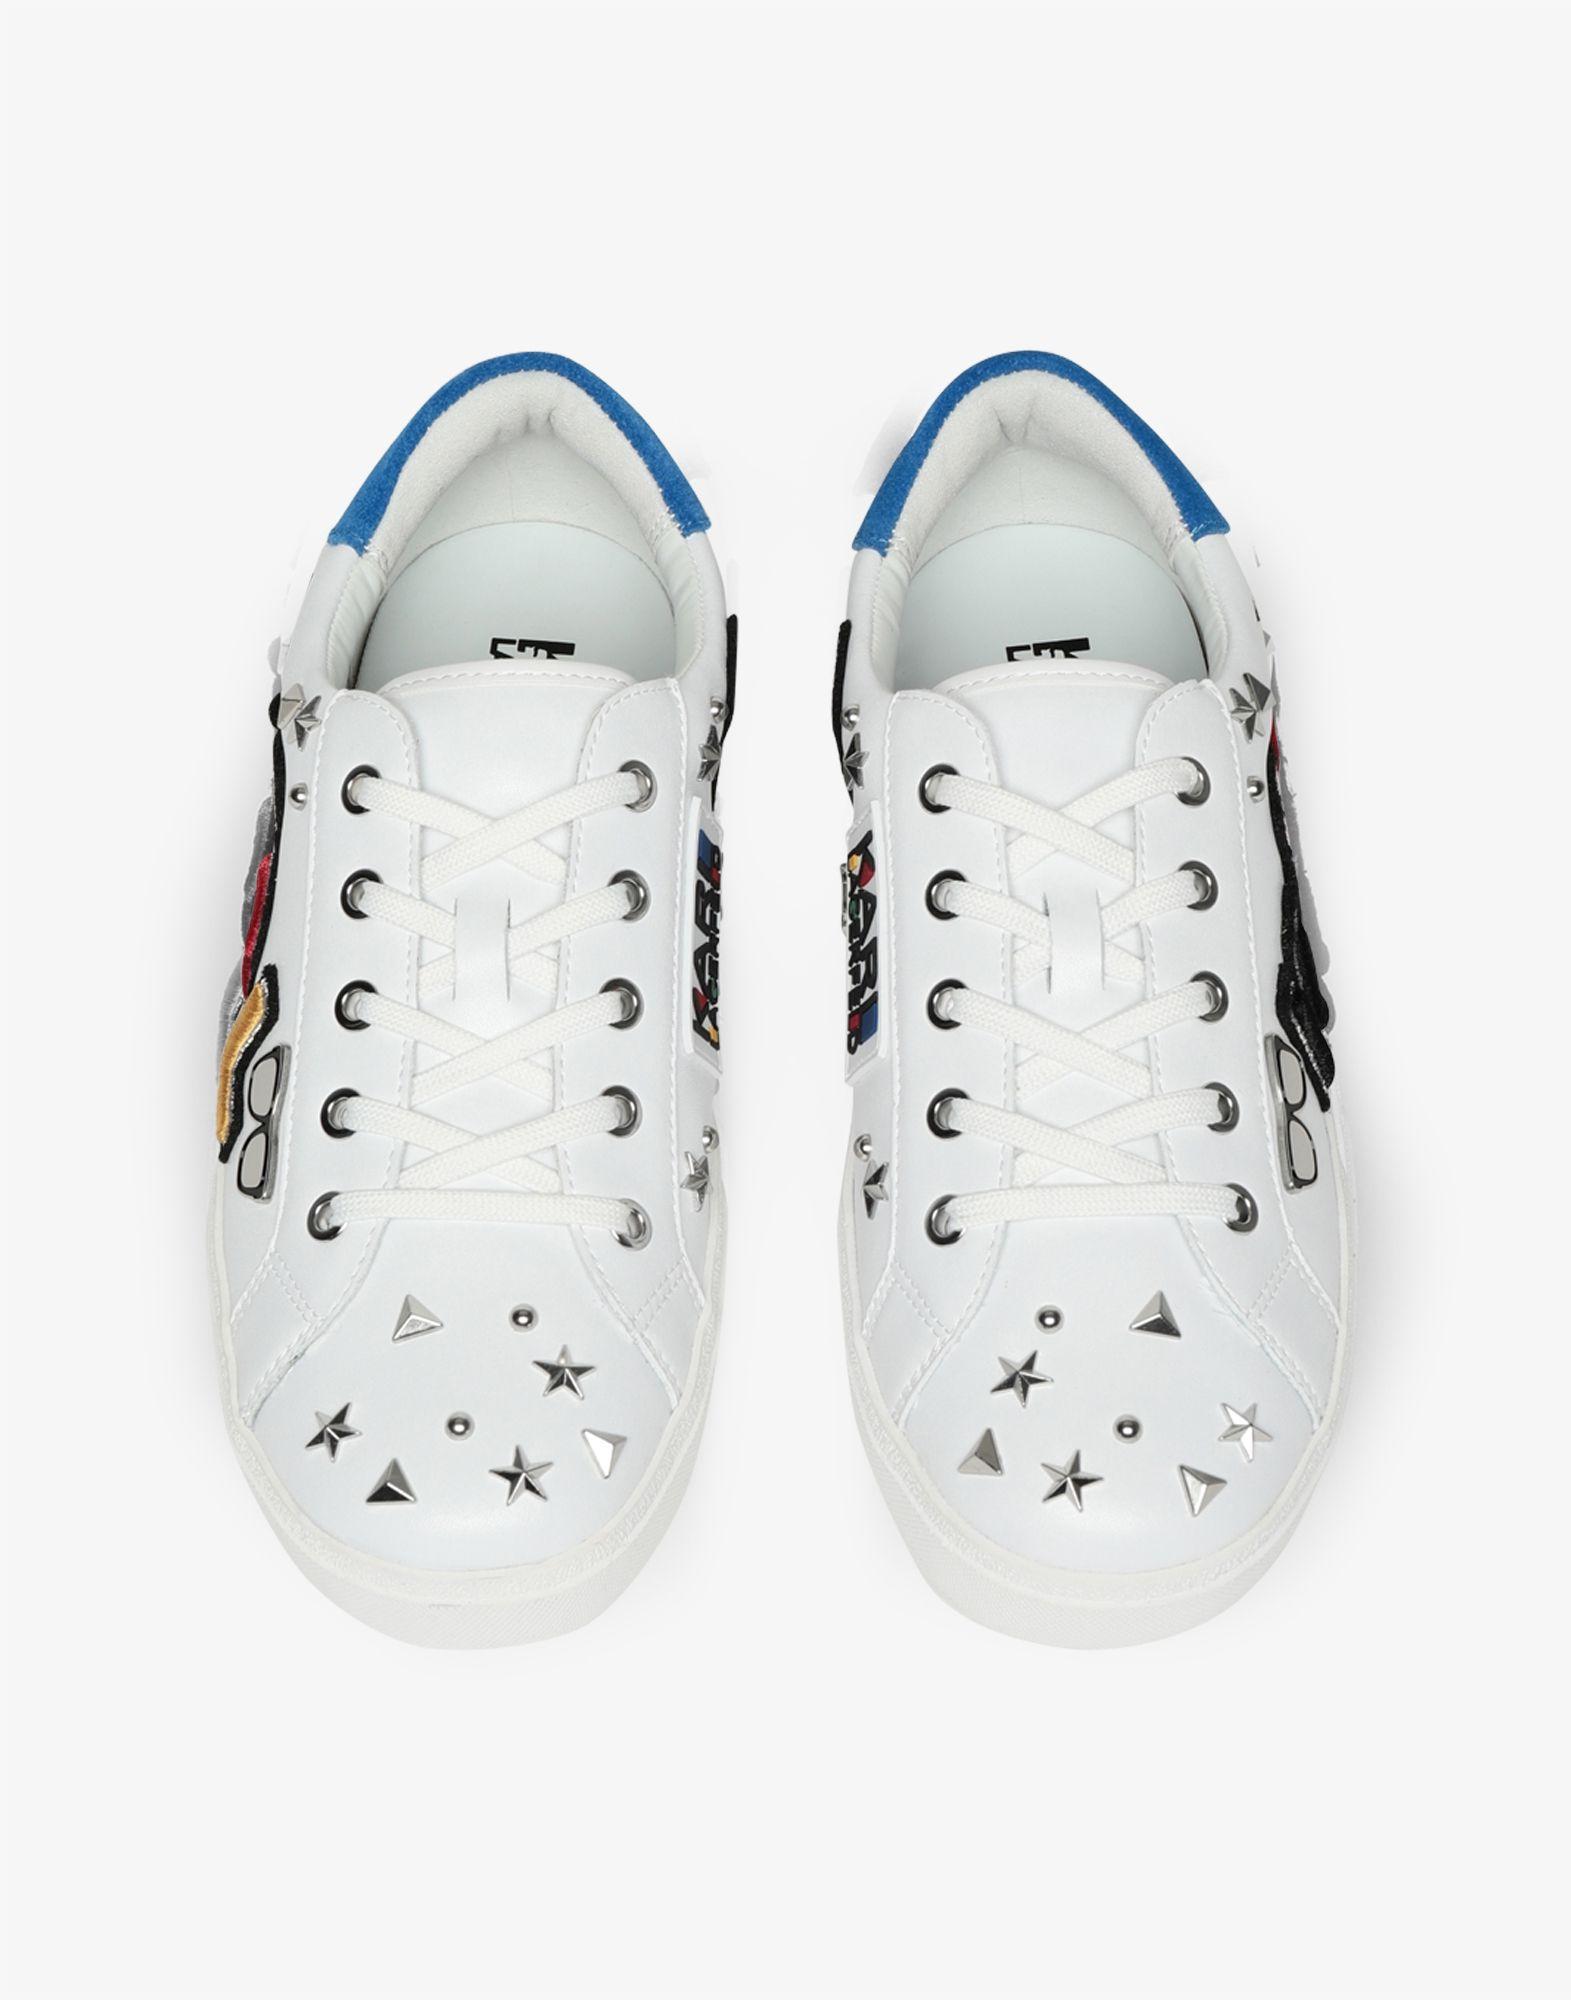 Karl Lagerfeld Low-tops & Sneakers in White - Lyst